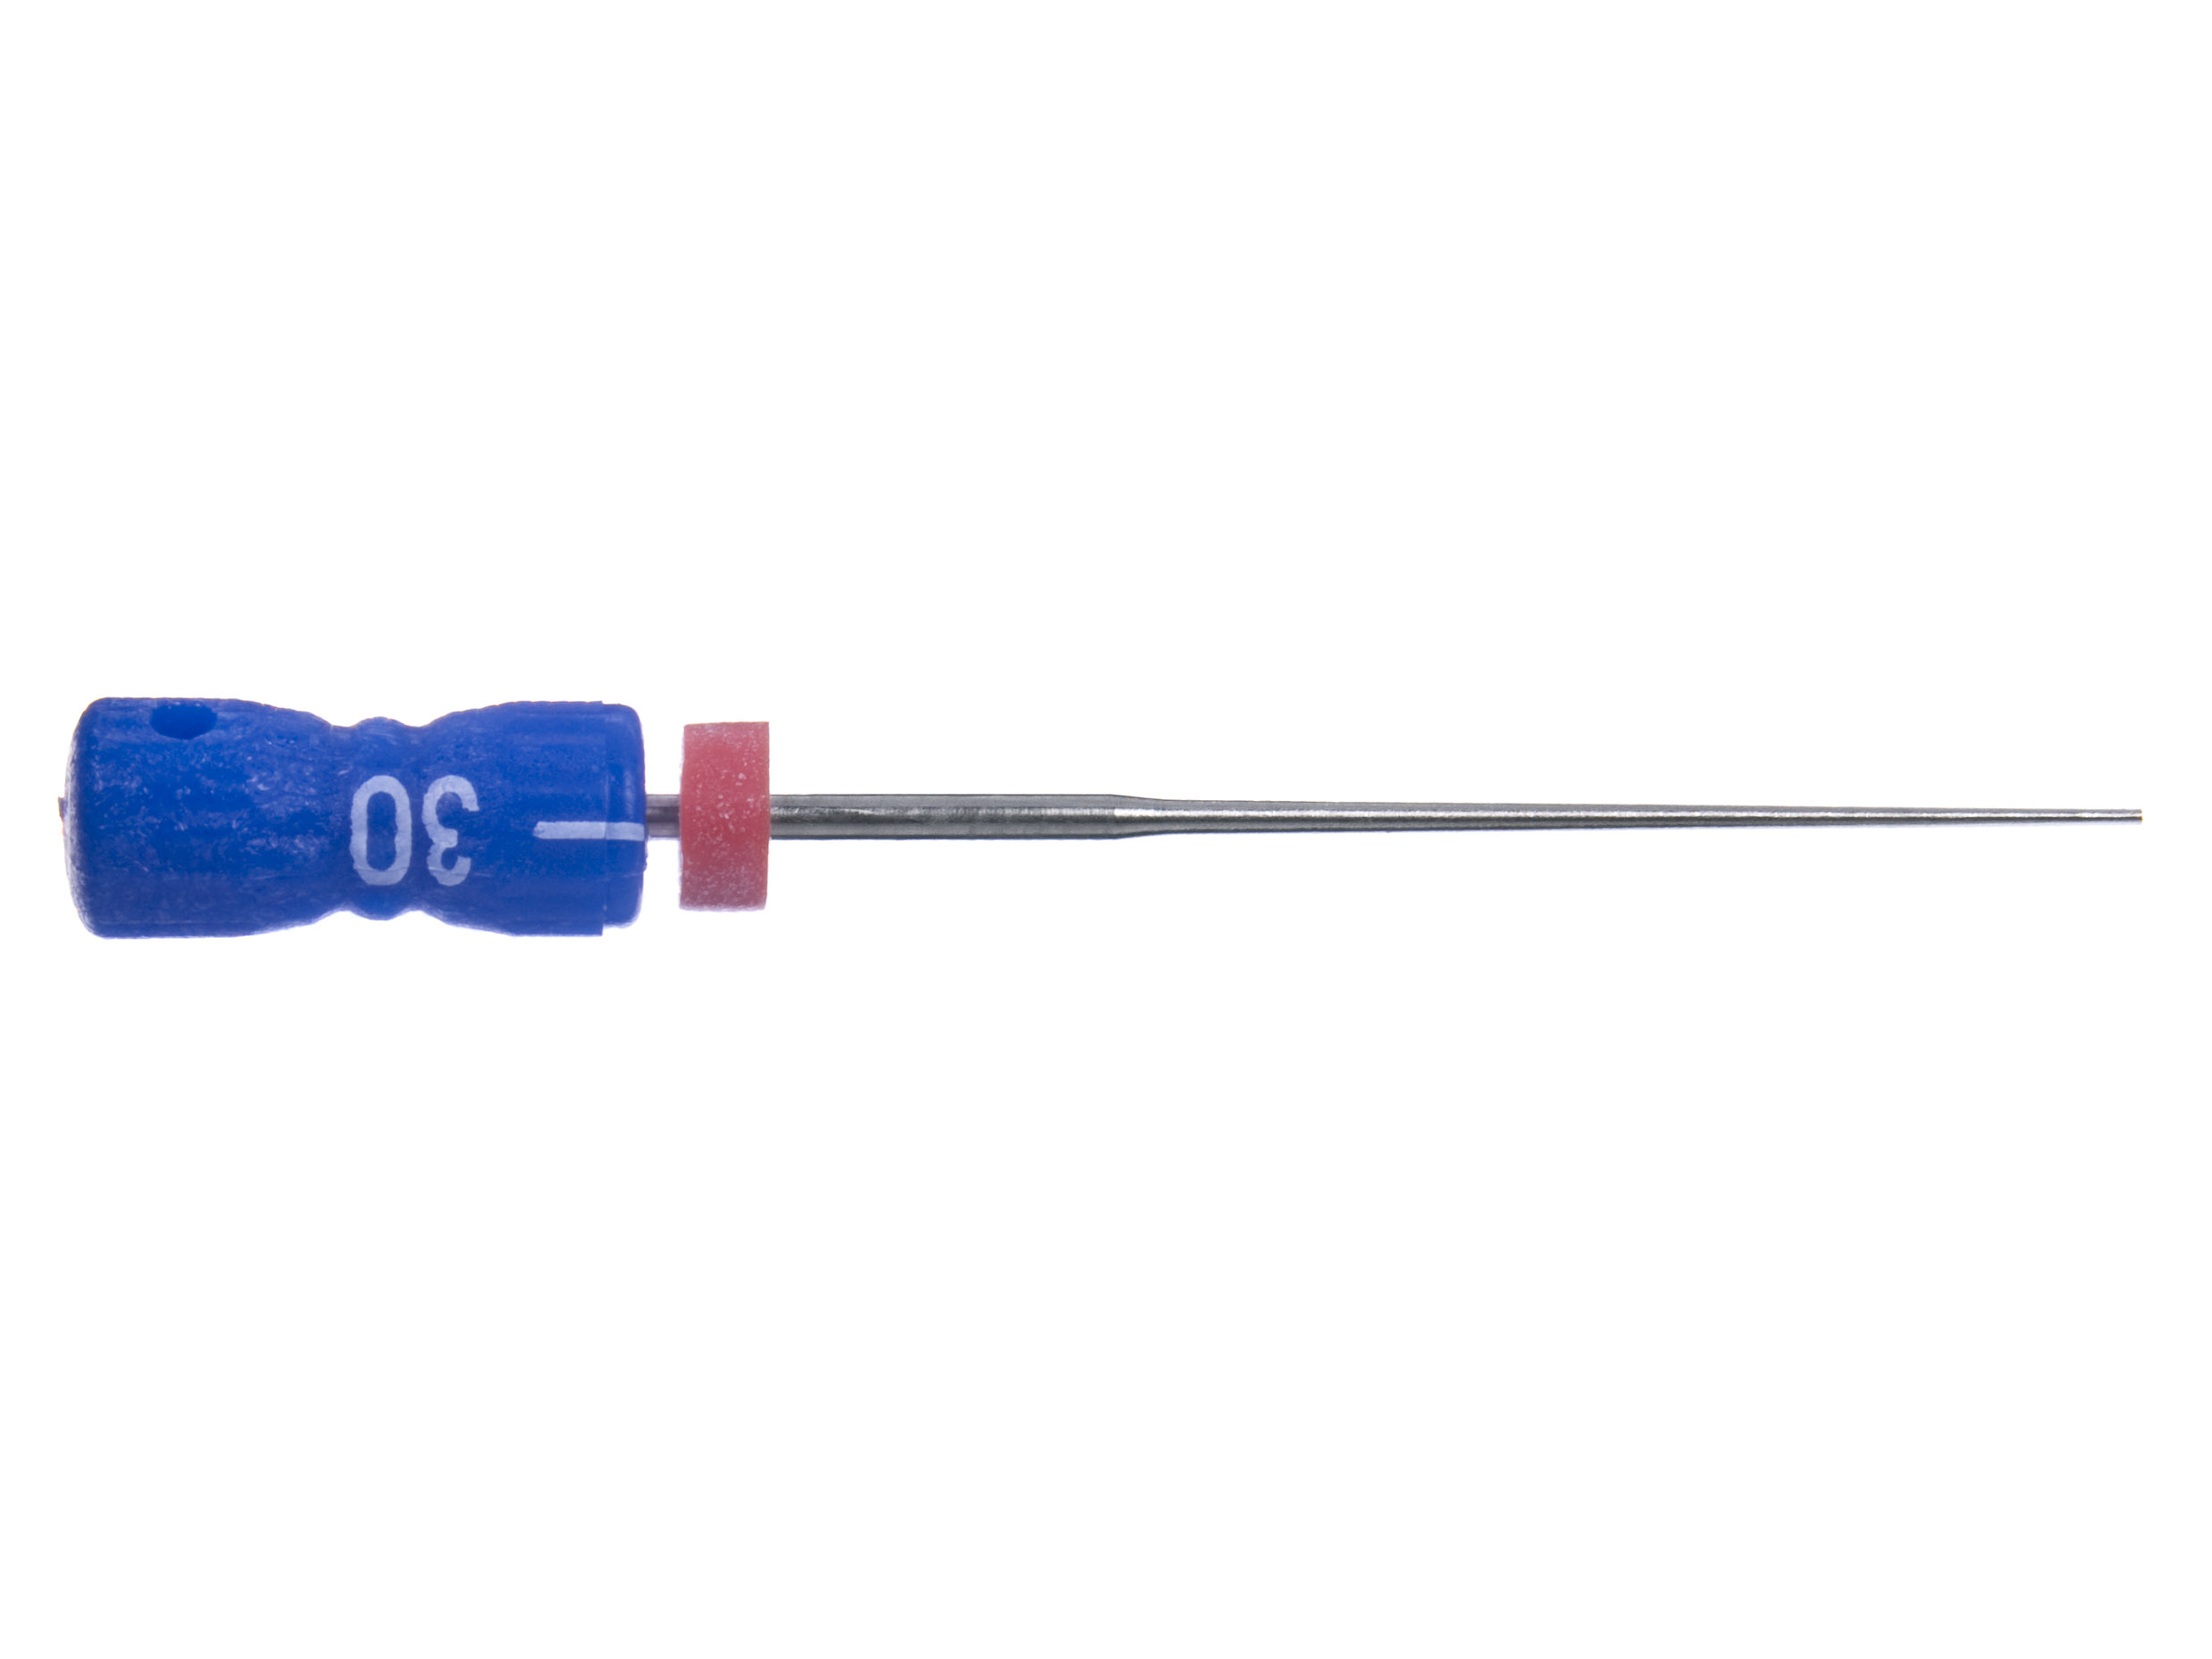 Finger Plugger n30 L21 2% (steel) - инструменты эндодонтические